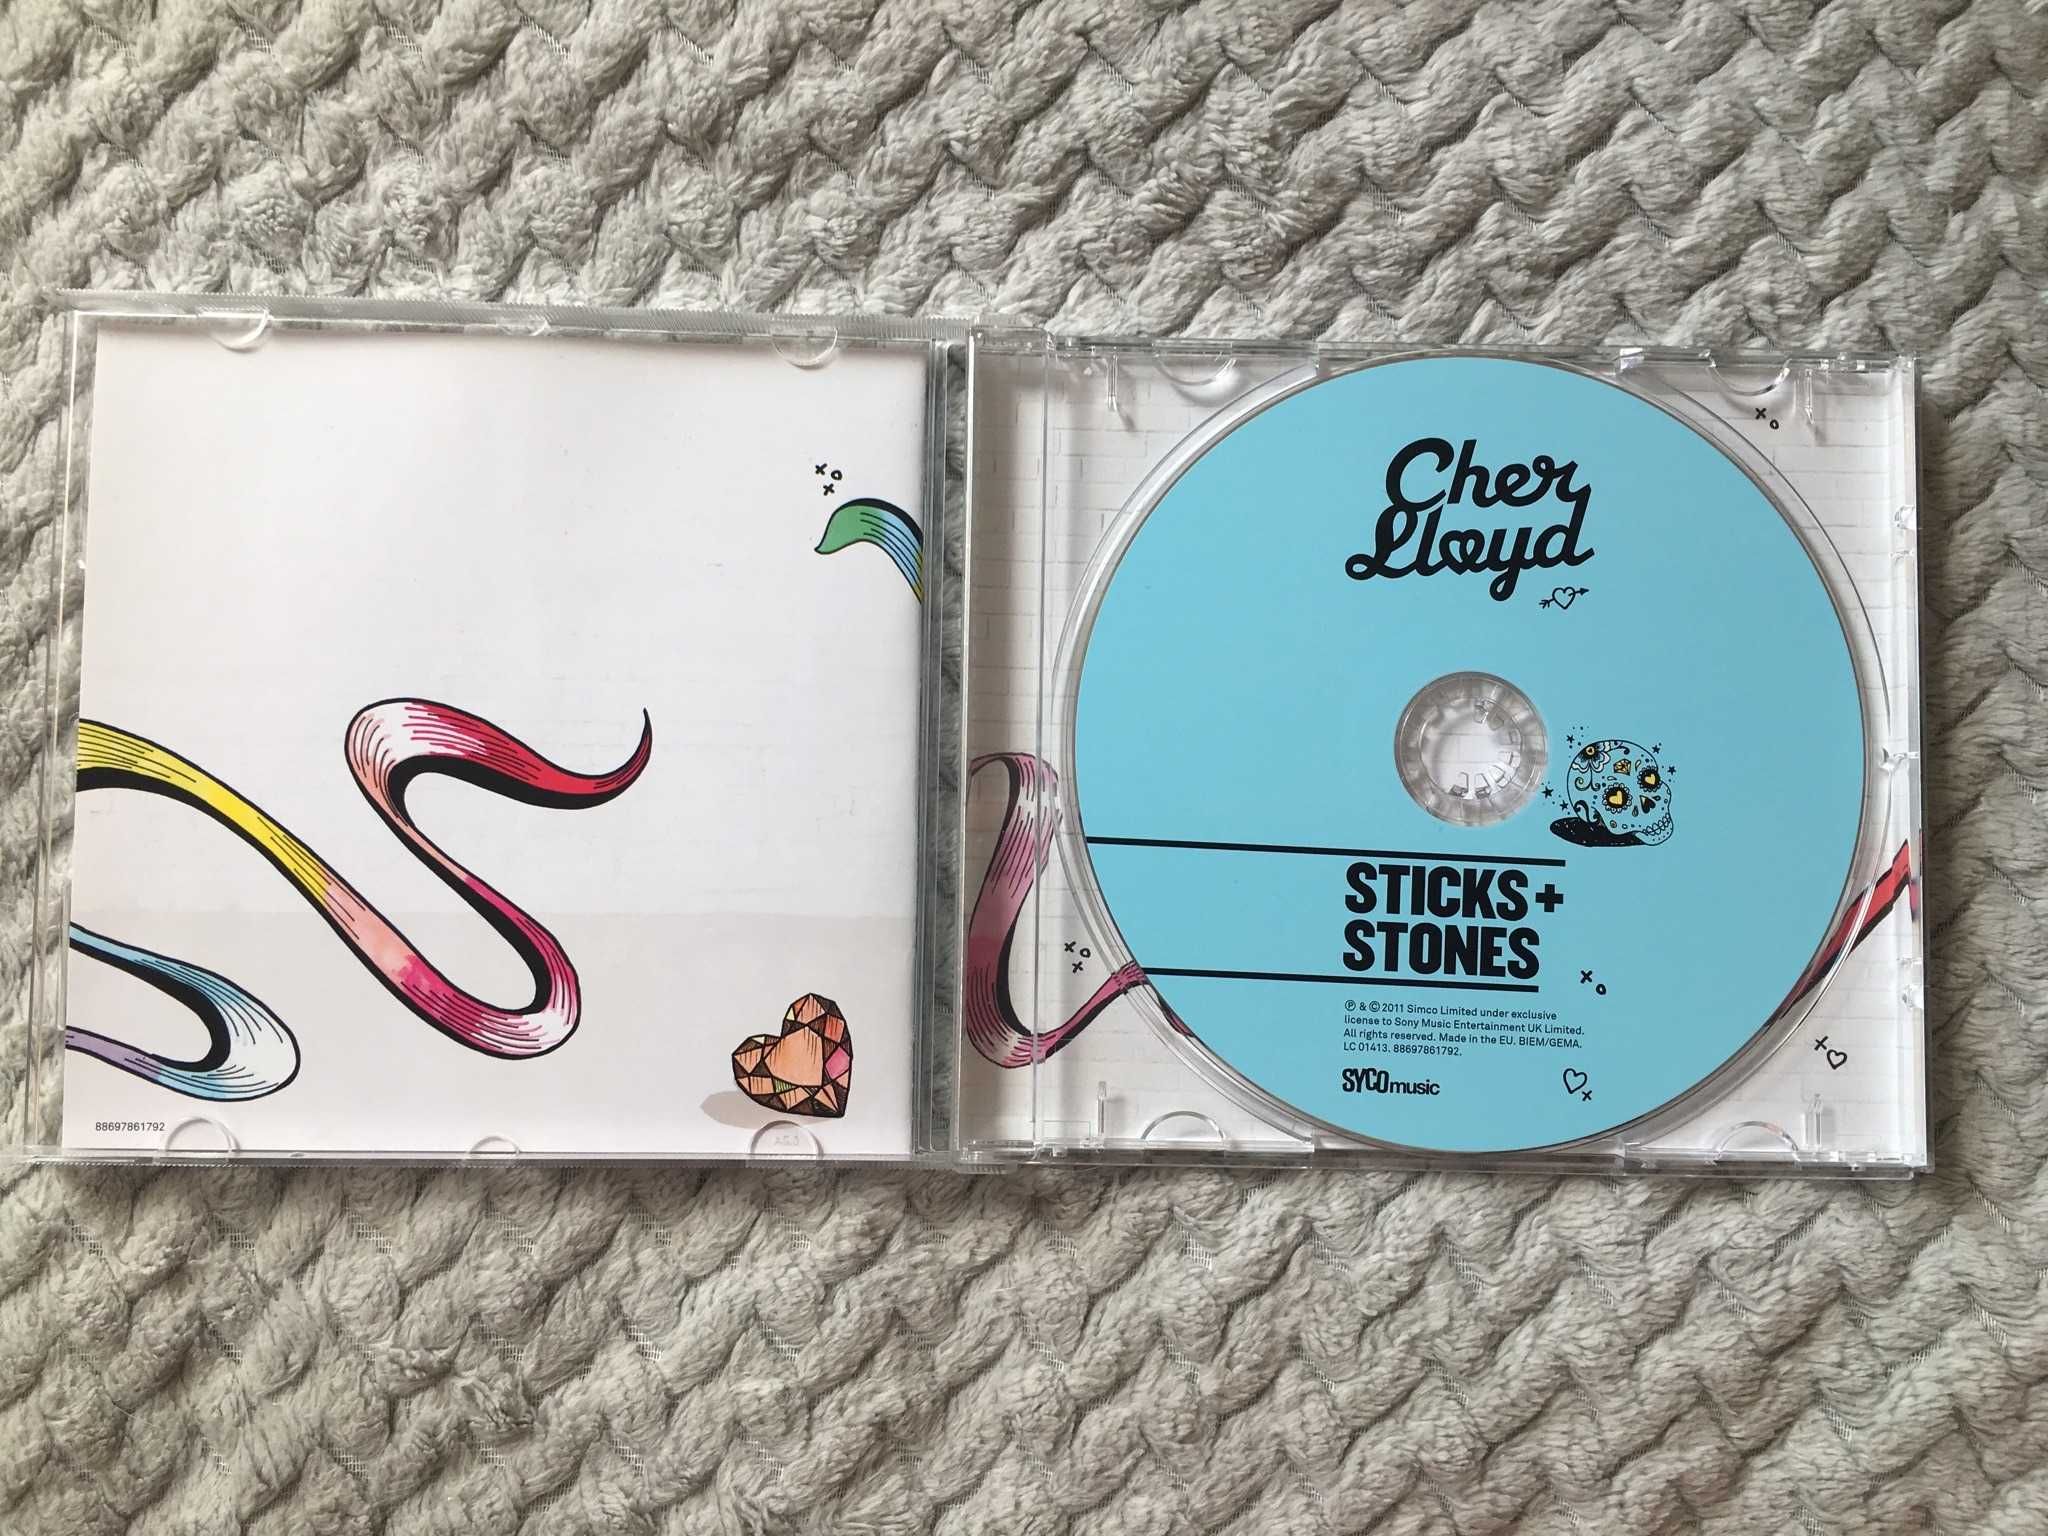 Cher Lloyd "Sticks and Stones" CD